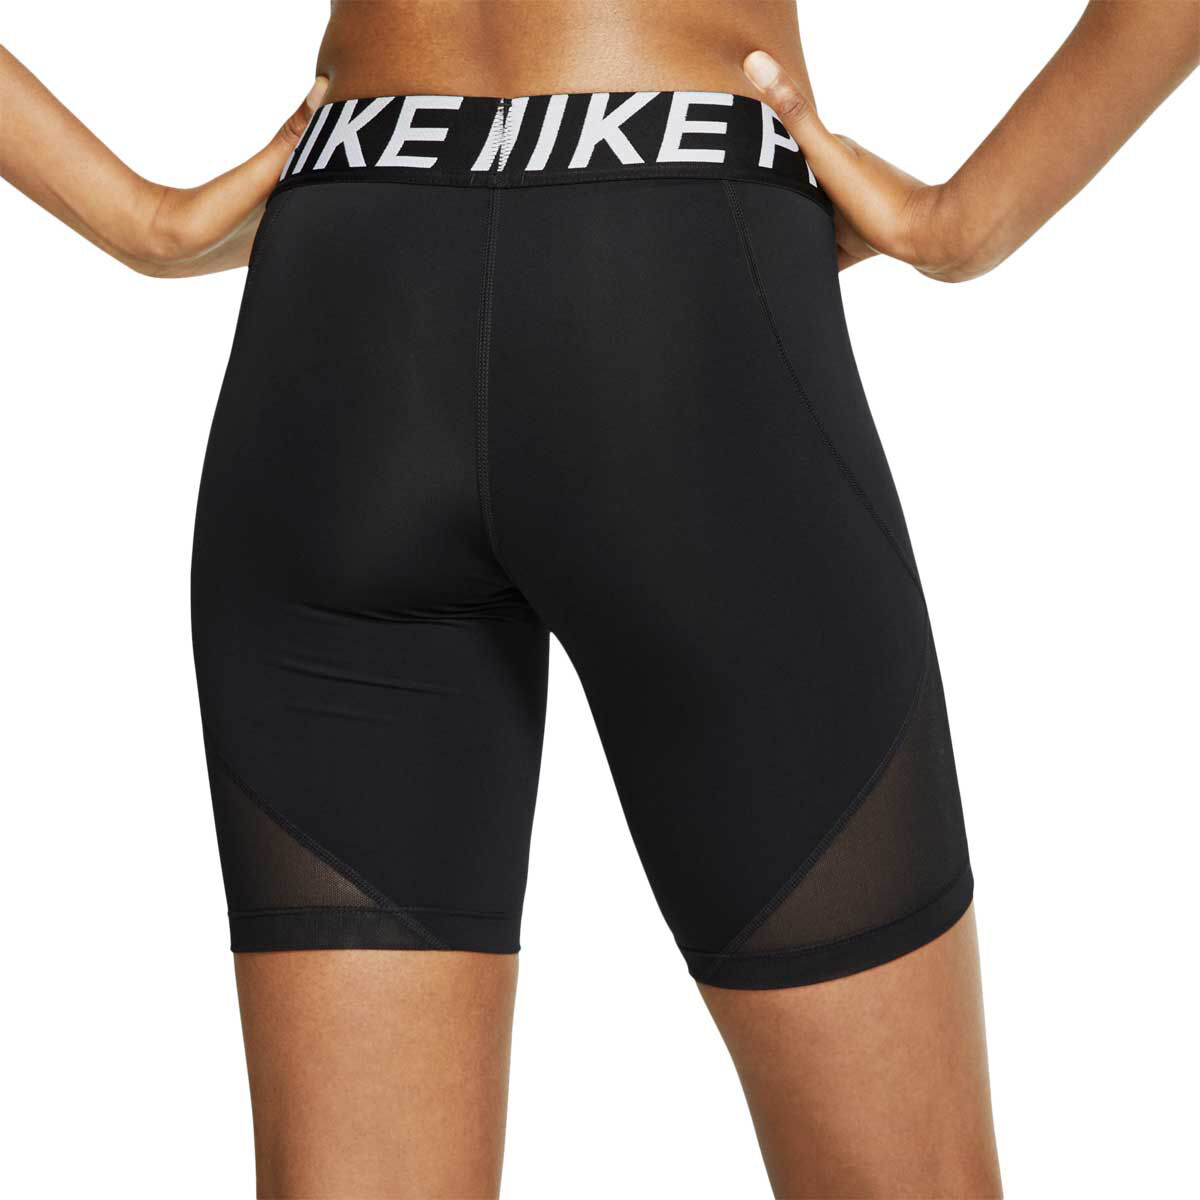 pro nike women's shorts